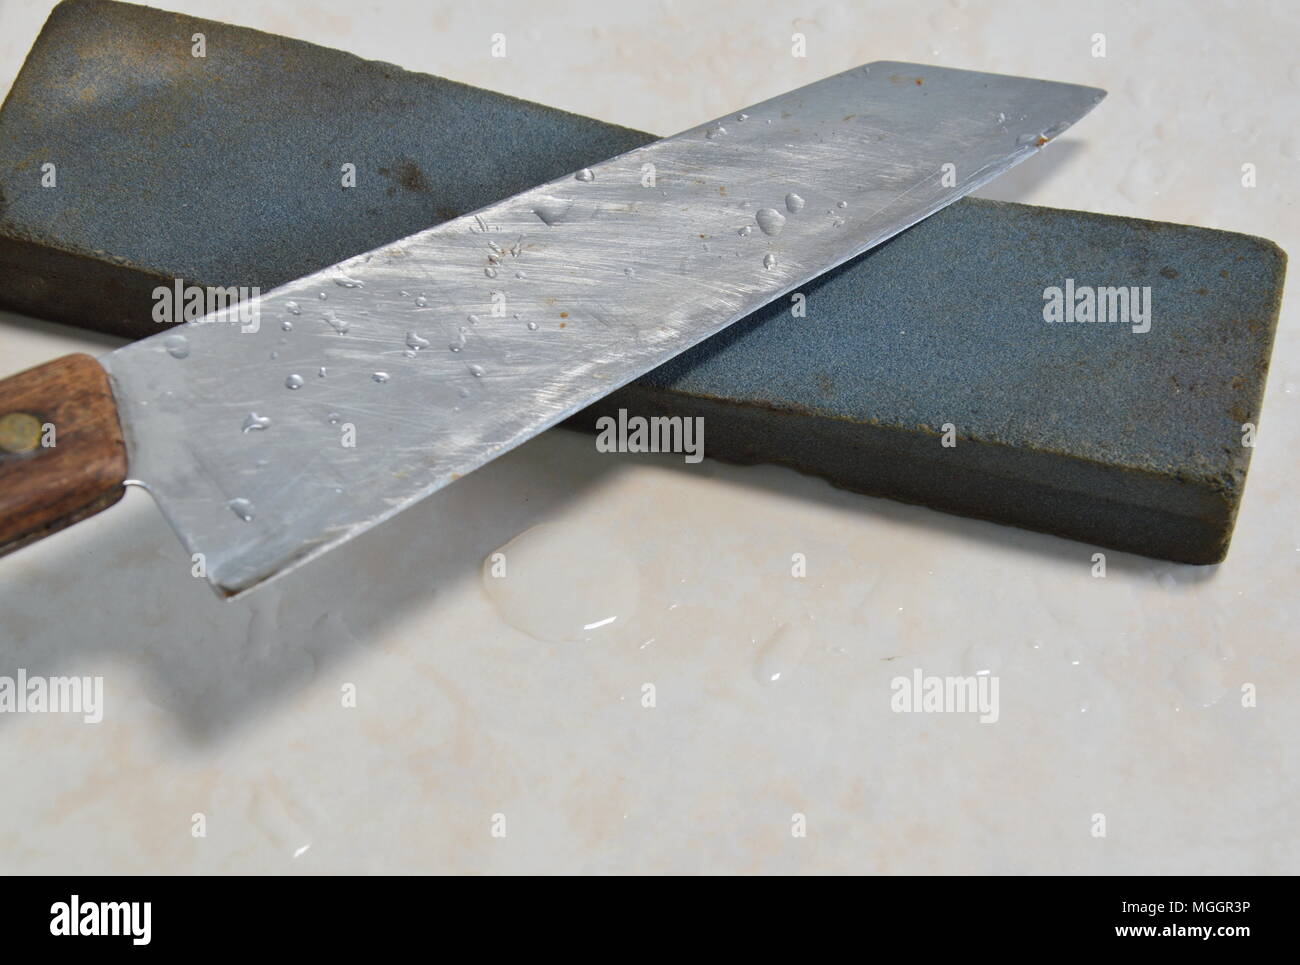 kitchen knife blade on grindstone Stock Photo - Alamy